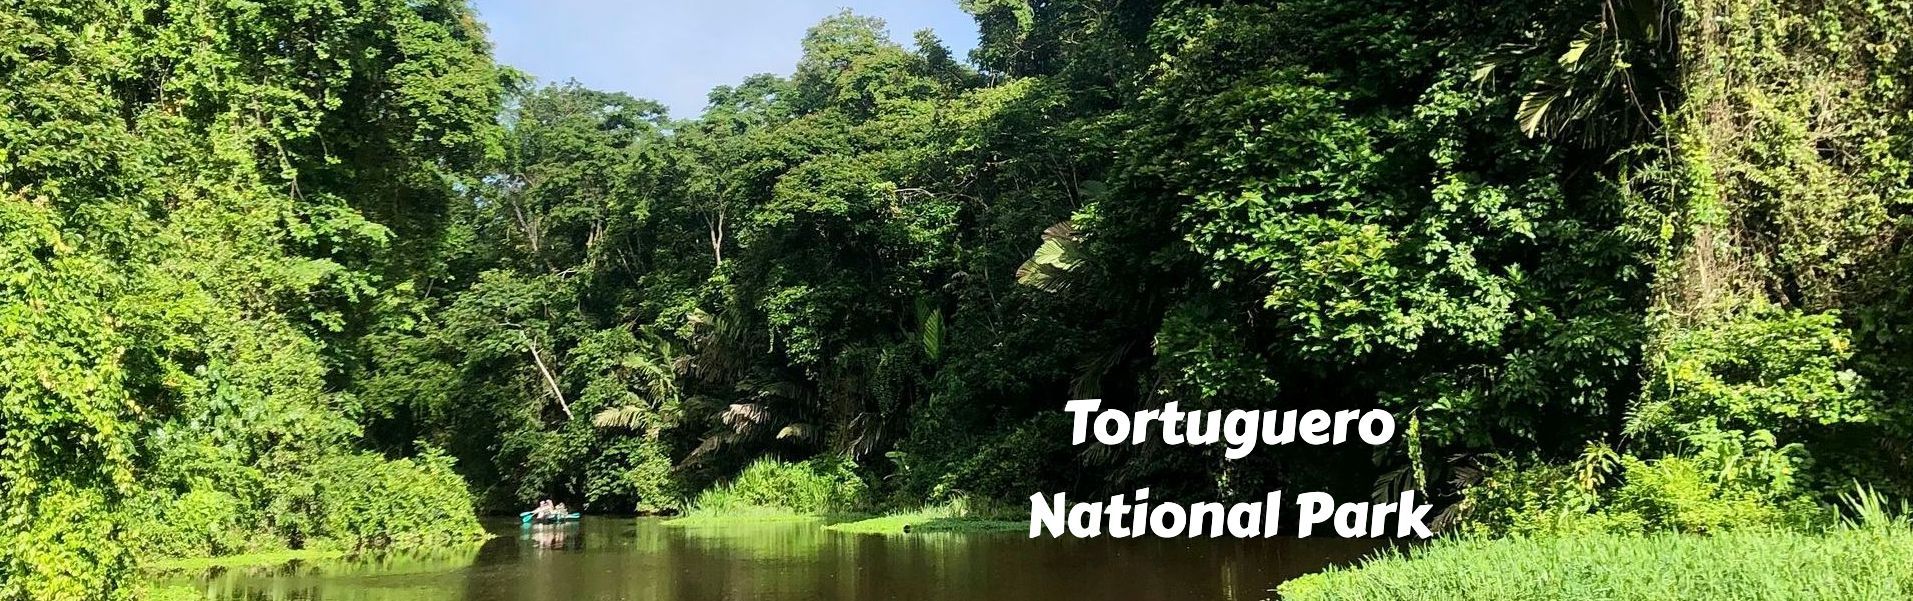 Tortuguero national park